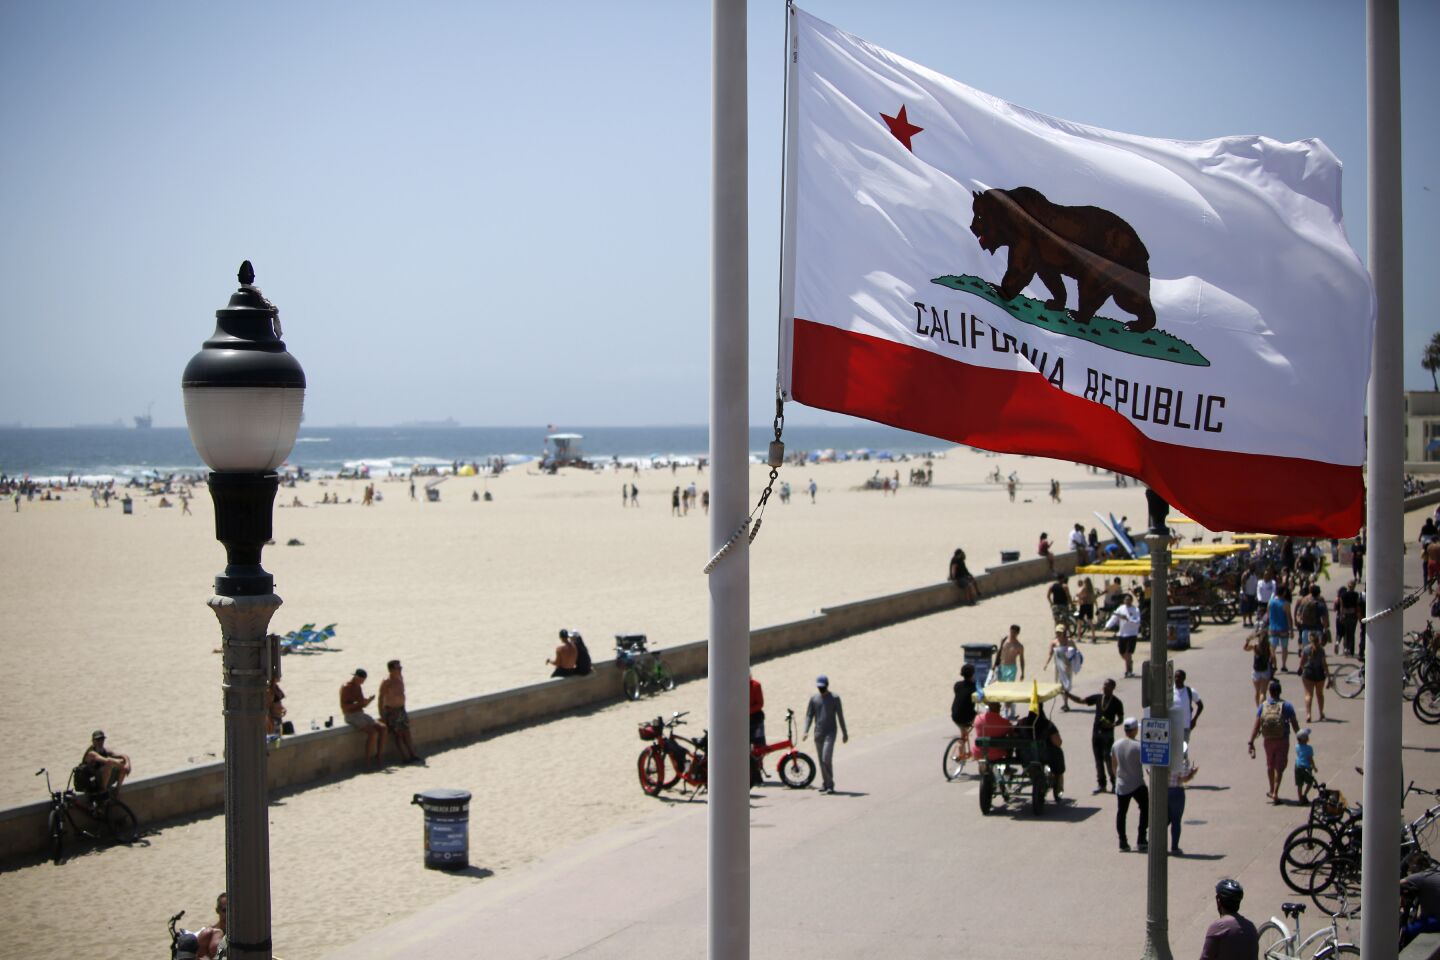 The California flag waves in the breeze as beachgoers enjoy a sunny day near the Huntington Beach Pier on Saturday.